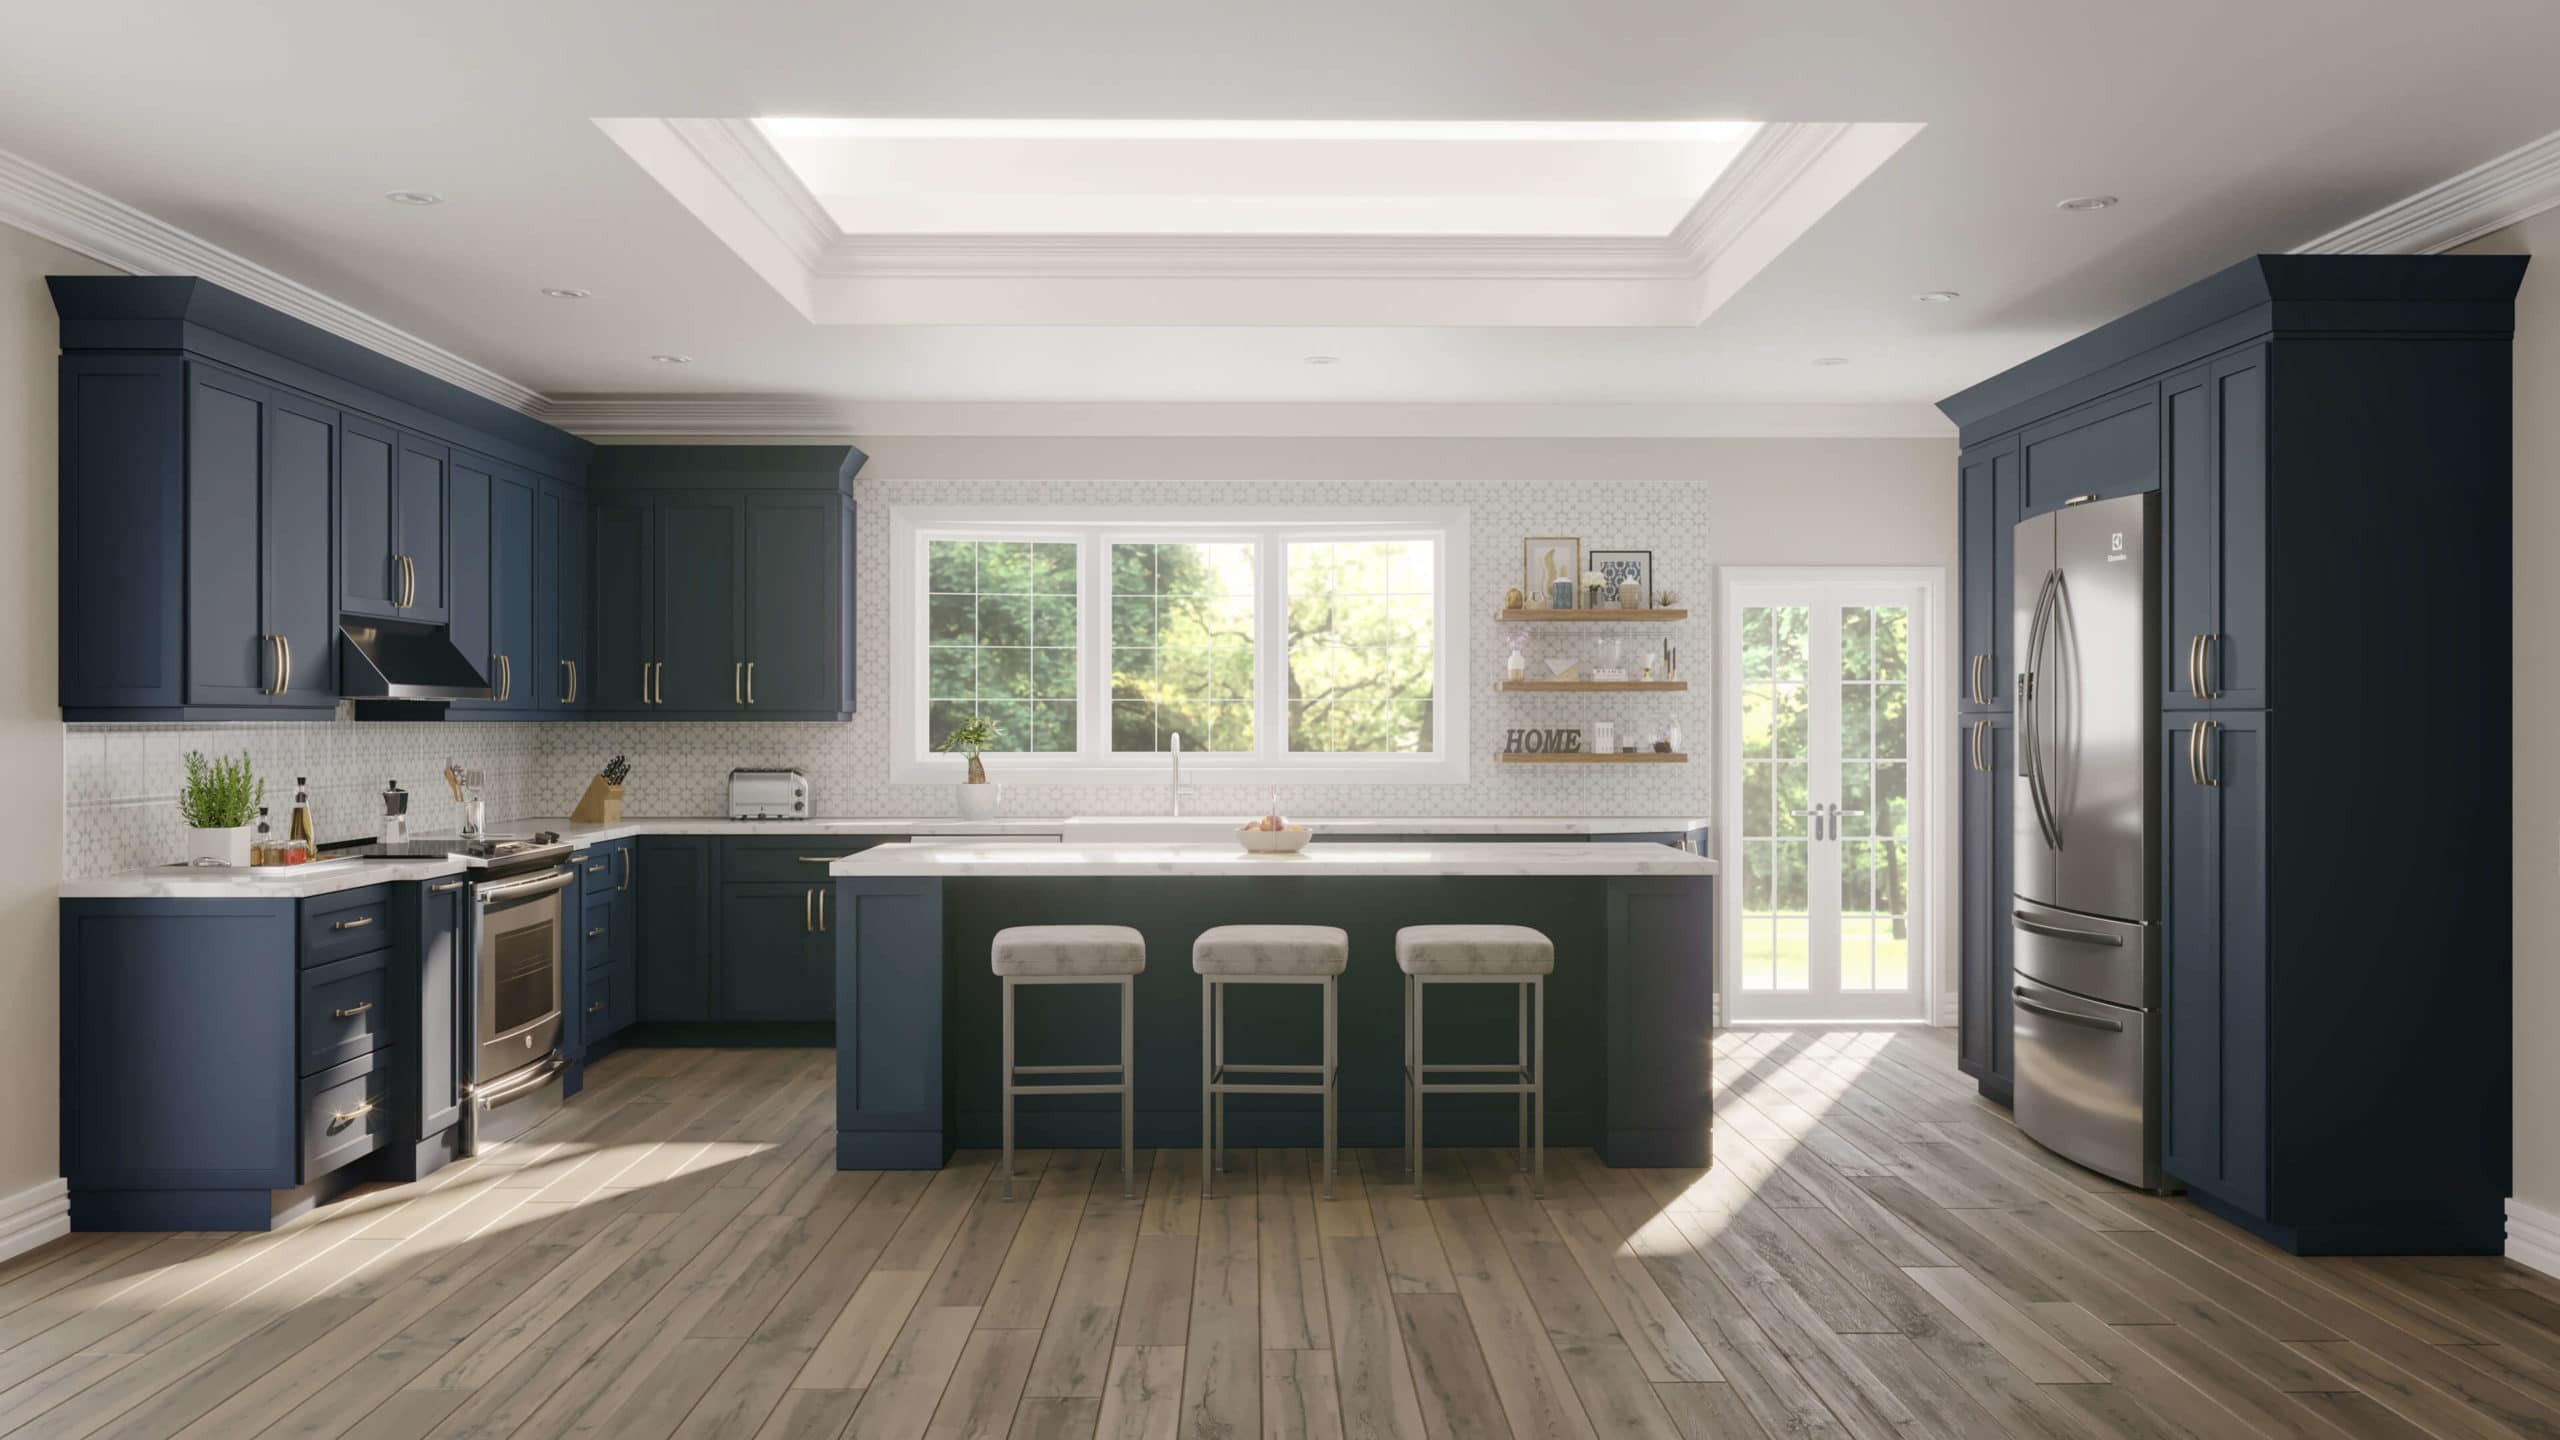 Kitchen featuring blue RTA kitchen cabinets, modern backsplash tile, and wood flooring